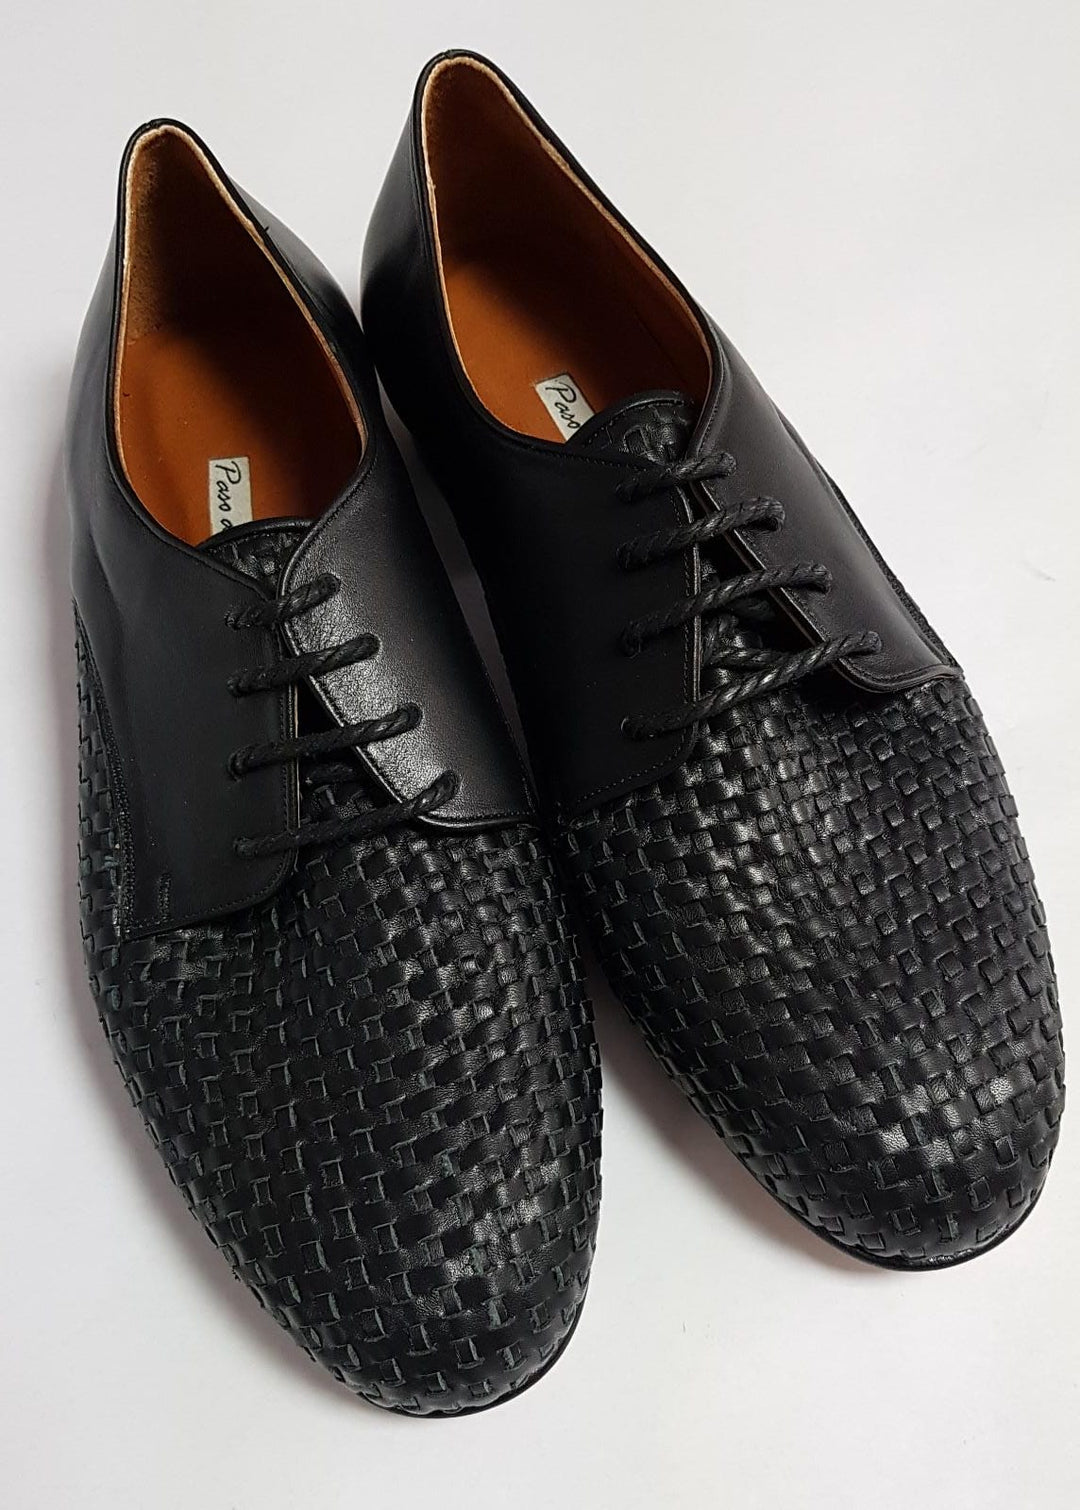 Troilo - Black Woven Leather-Paso de Fuego- Axis Tango - Best Tango Shoes